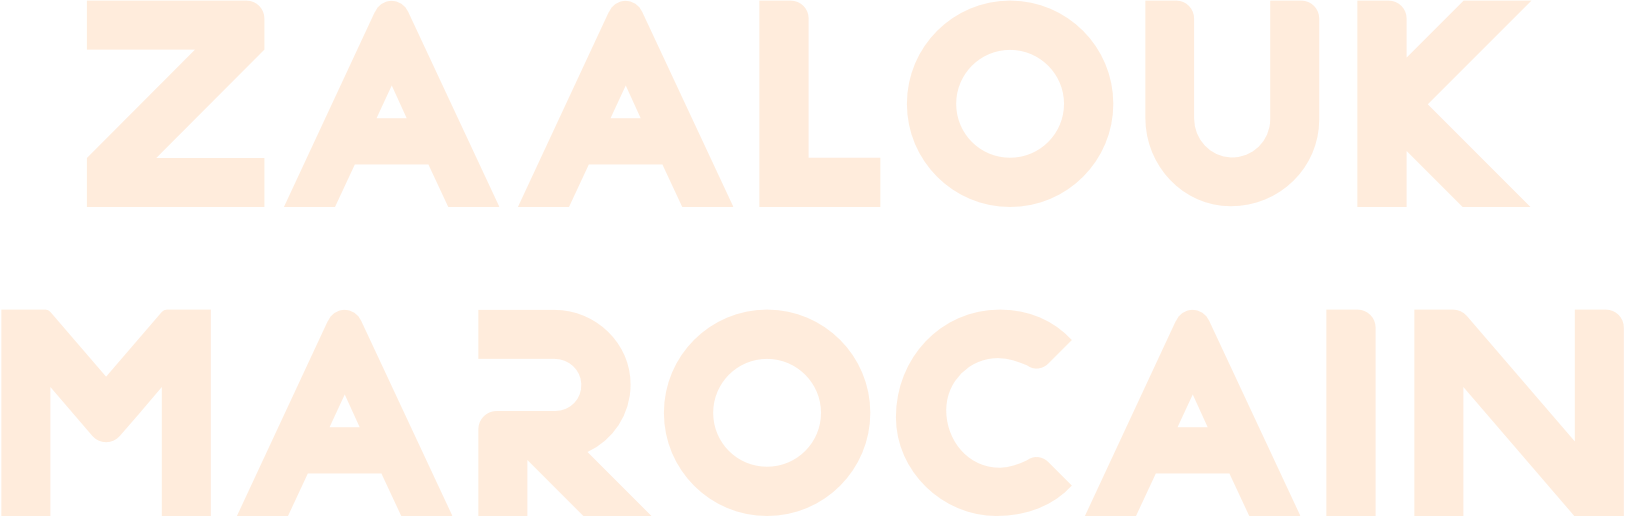 Zaalouk Marocain logo